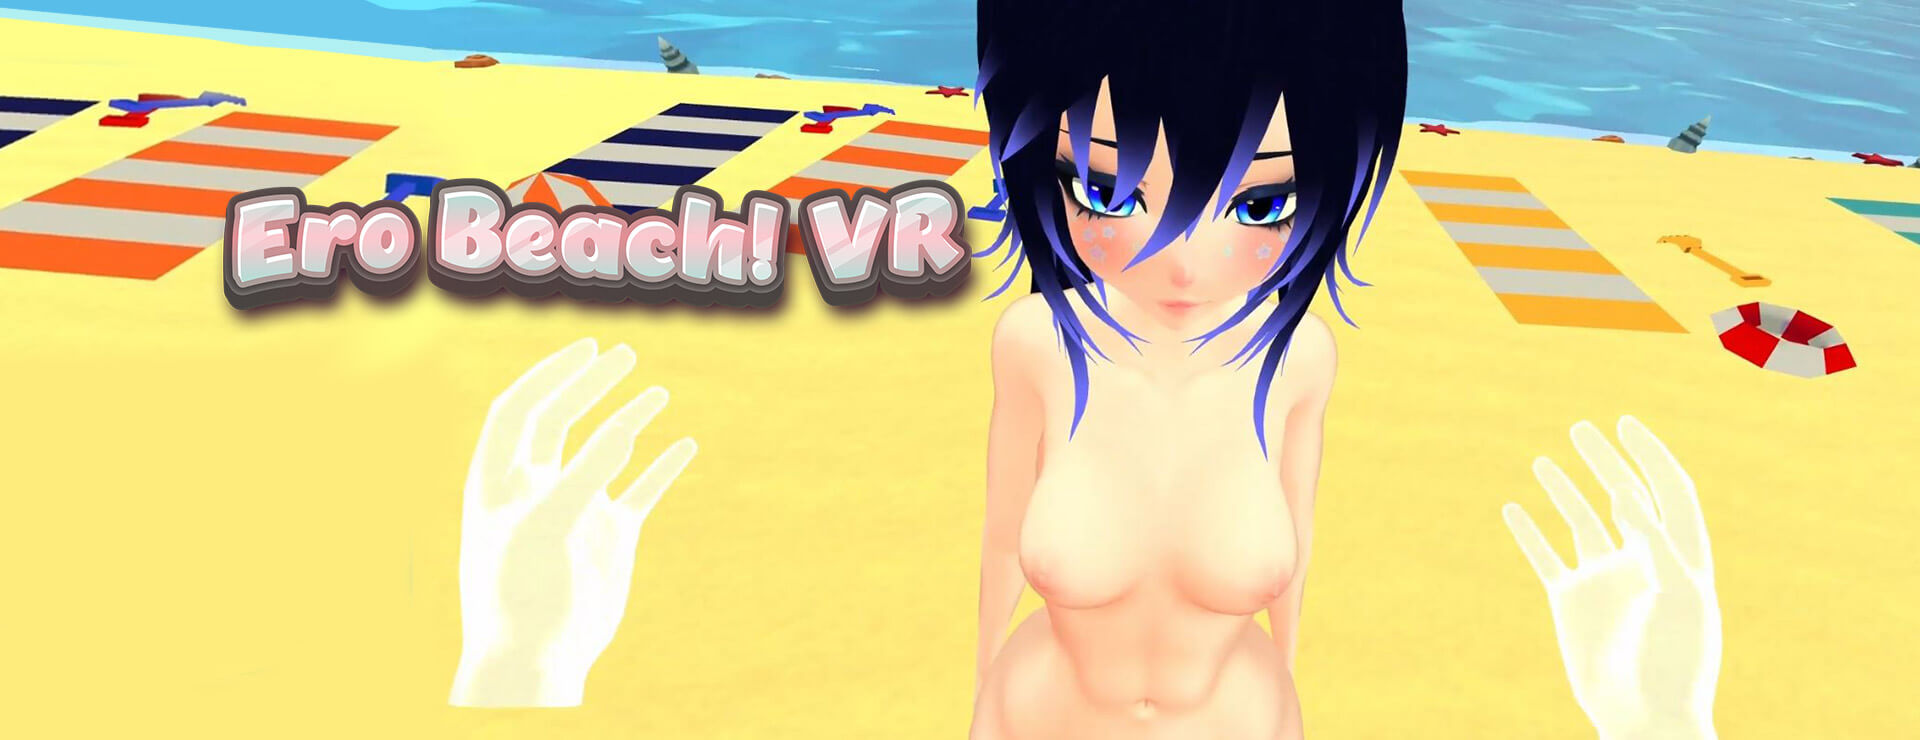 Ero Beach! VR - Symulacja Gra